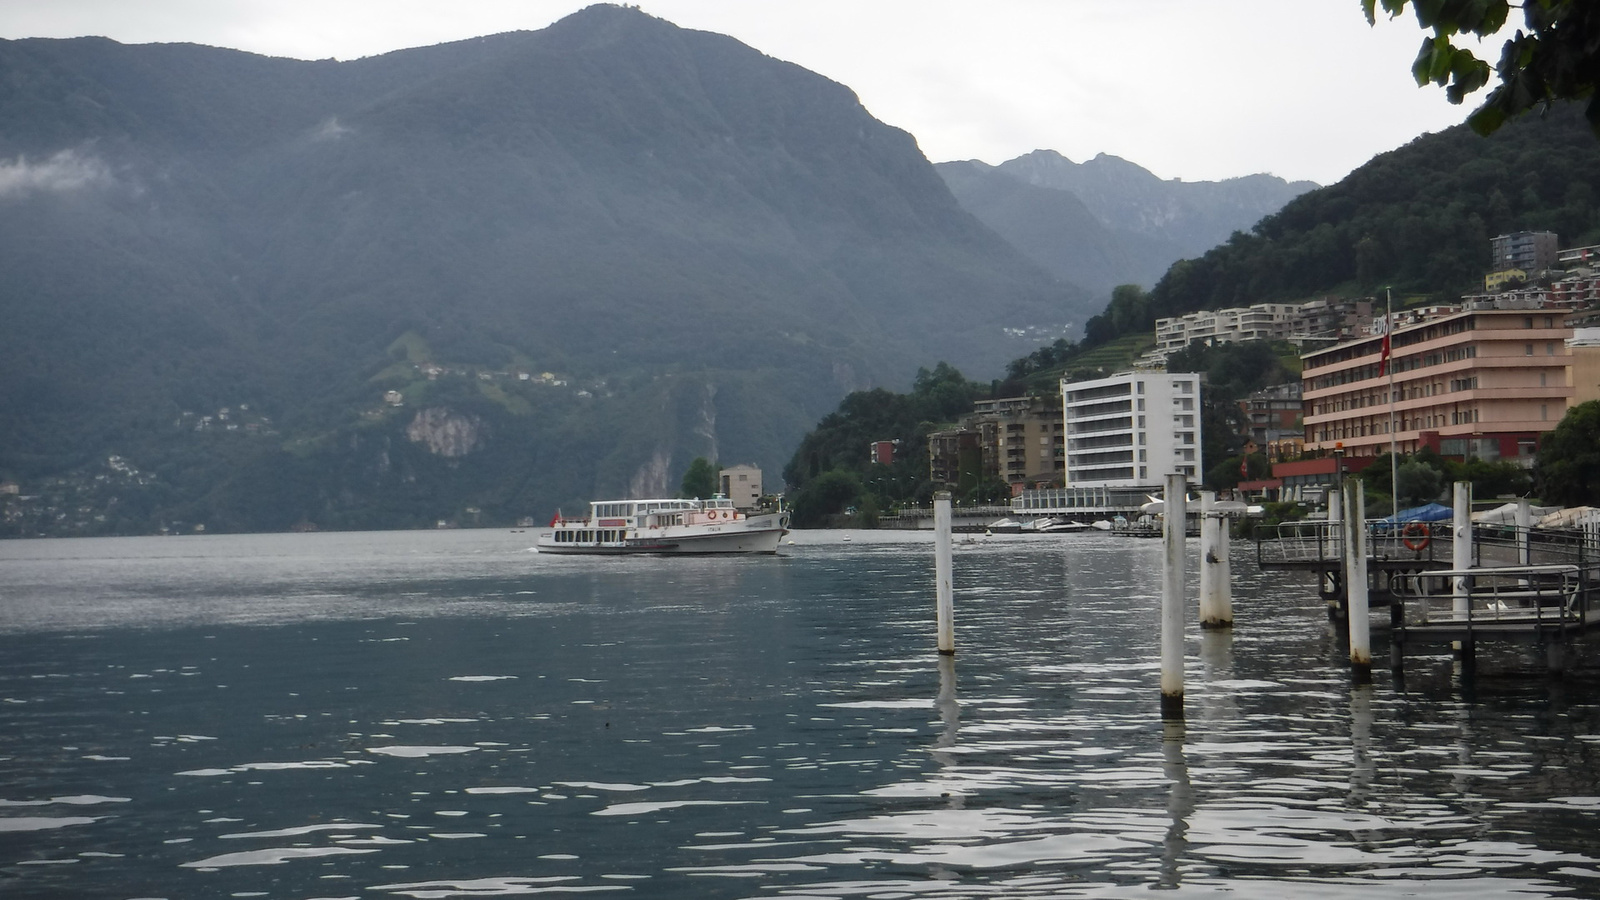 Kikötő/Lugano/